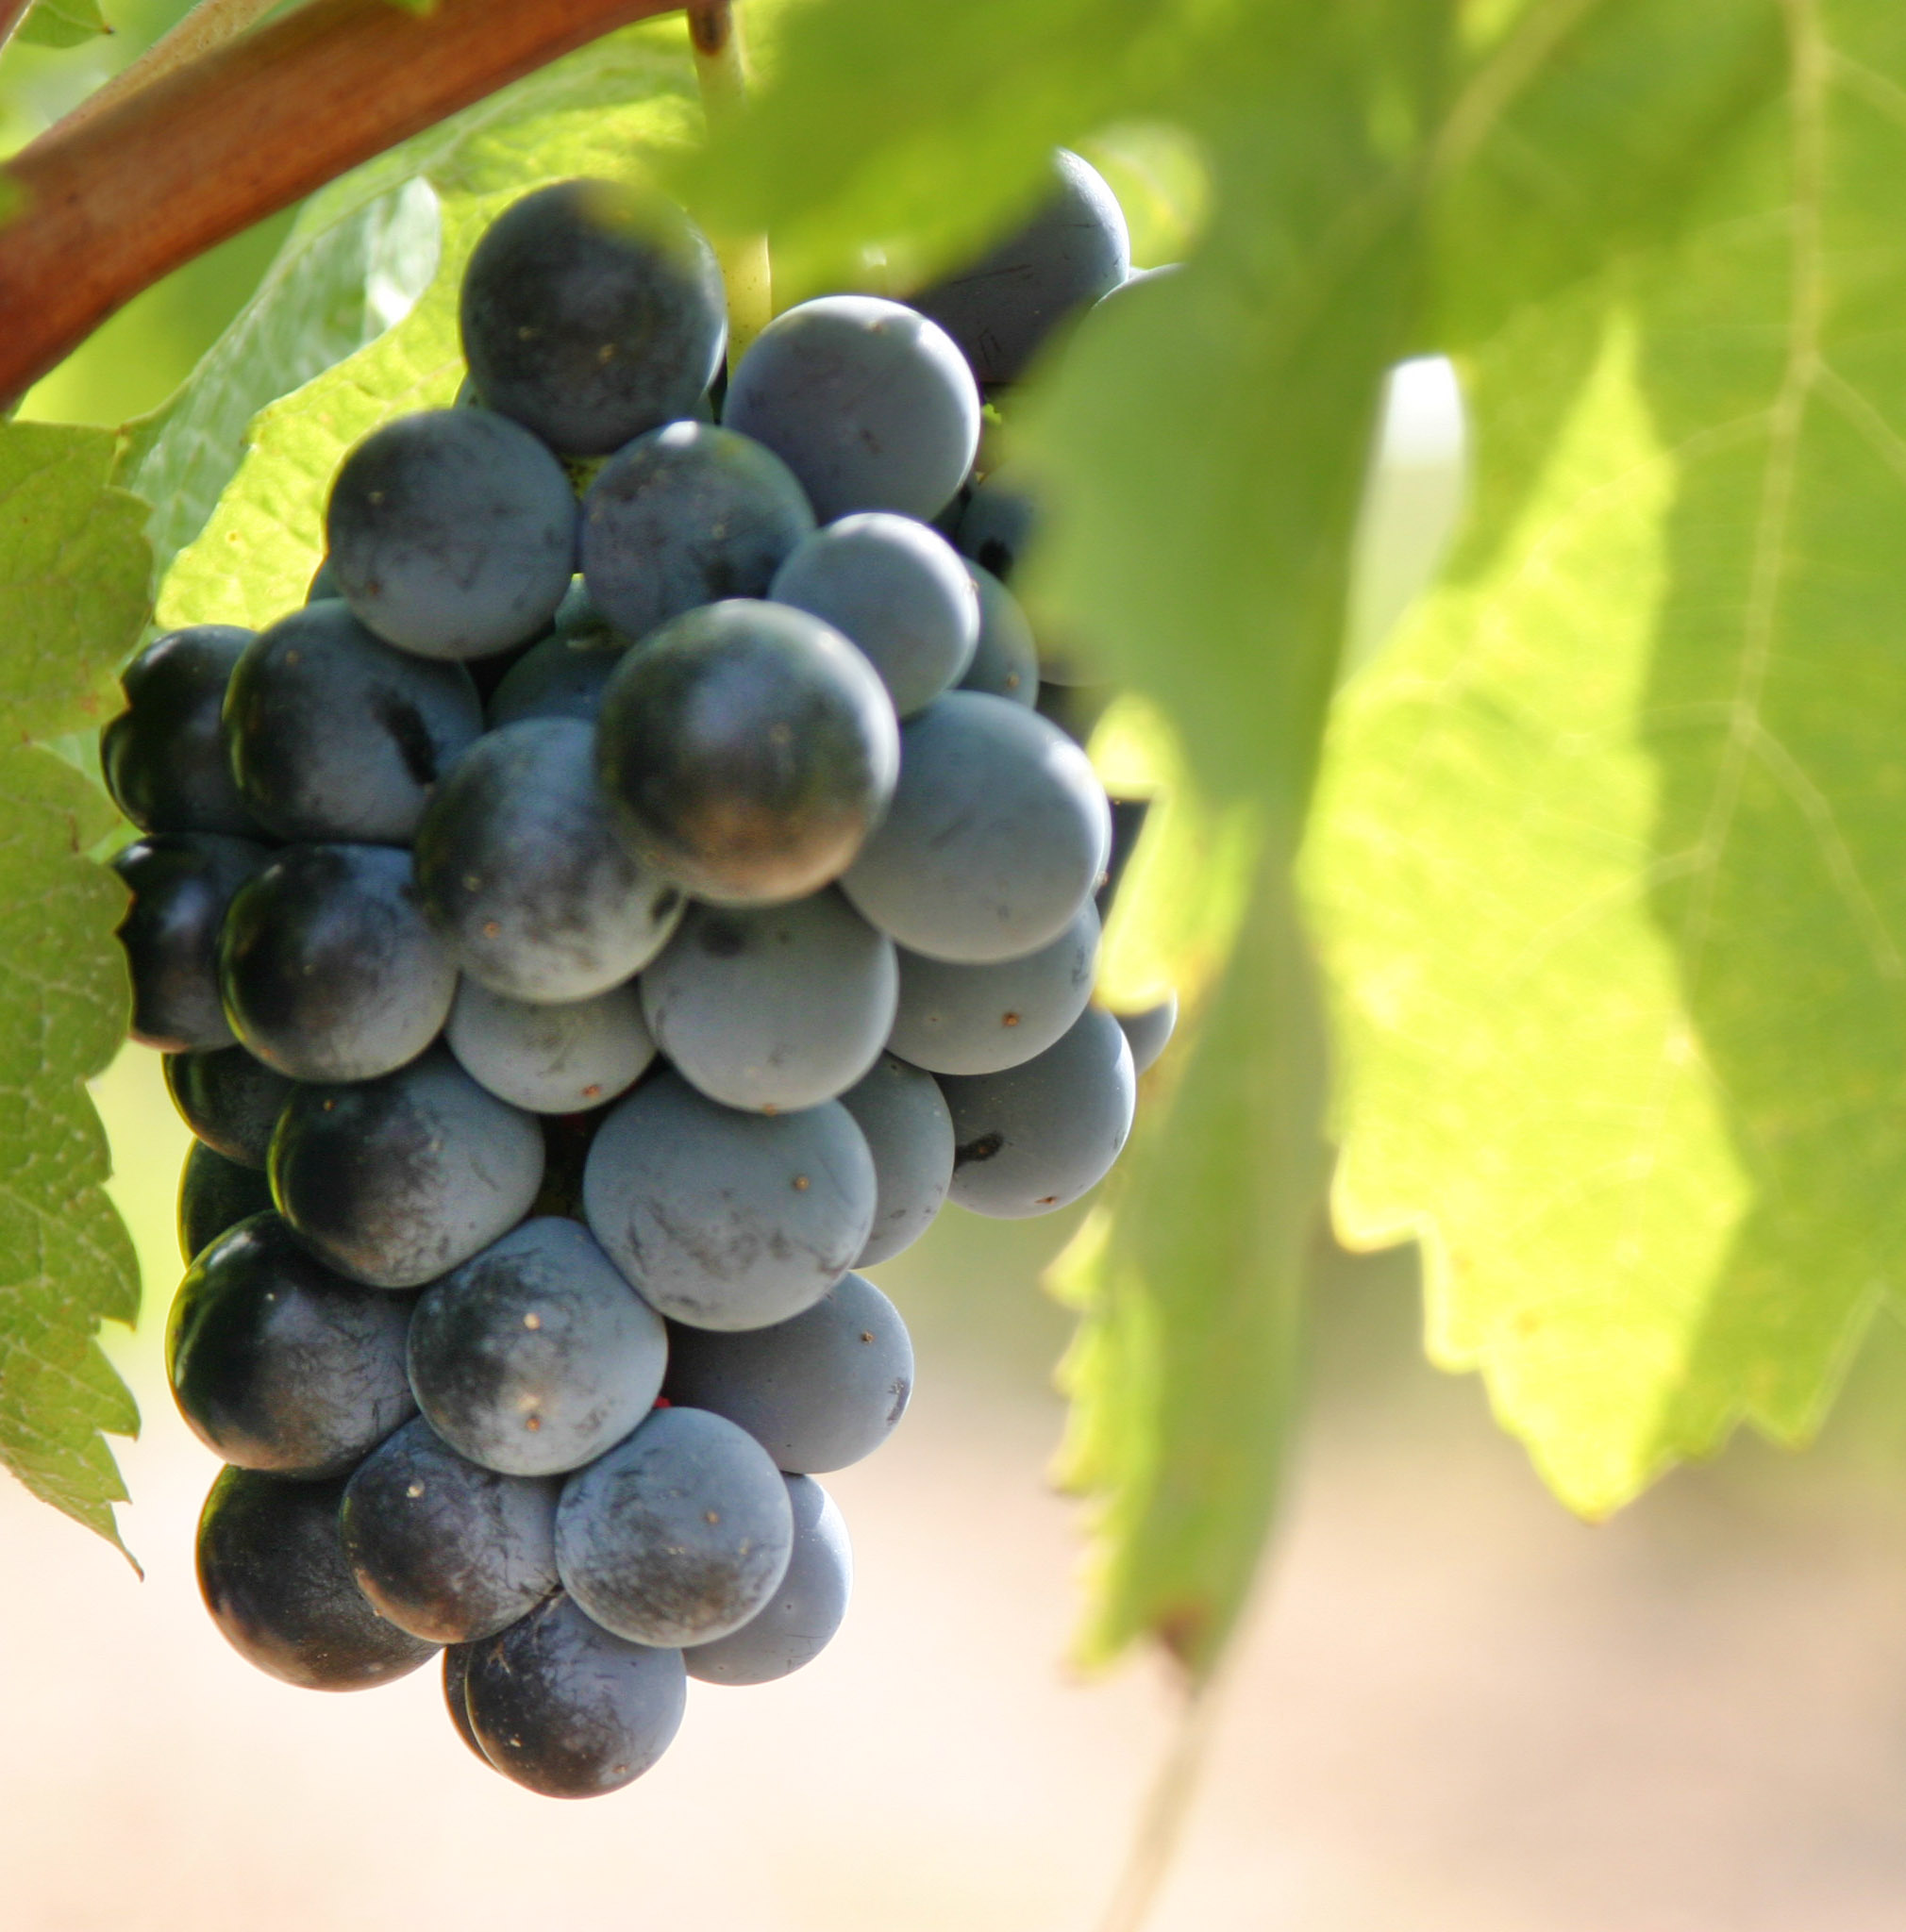 Grapes harvesting wine